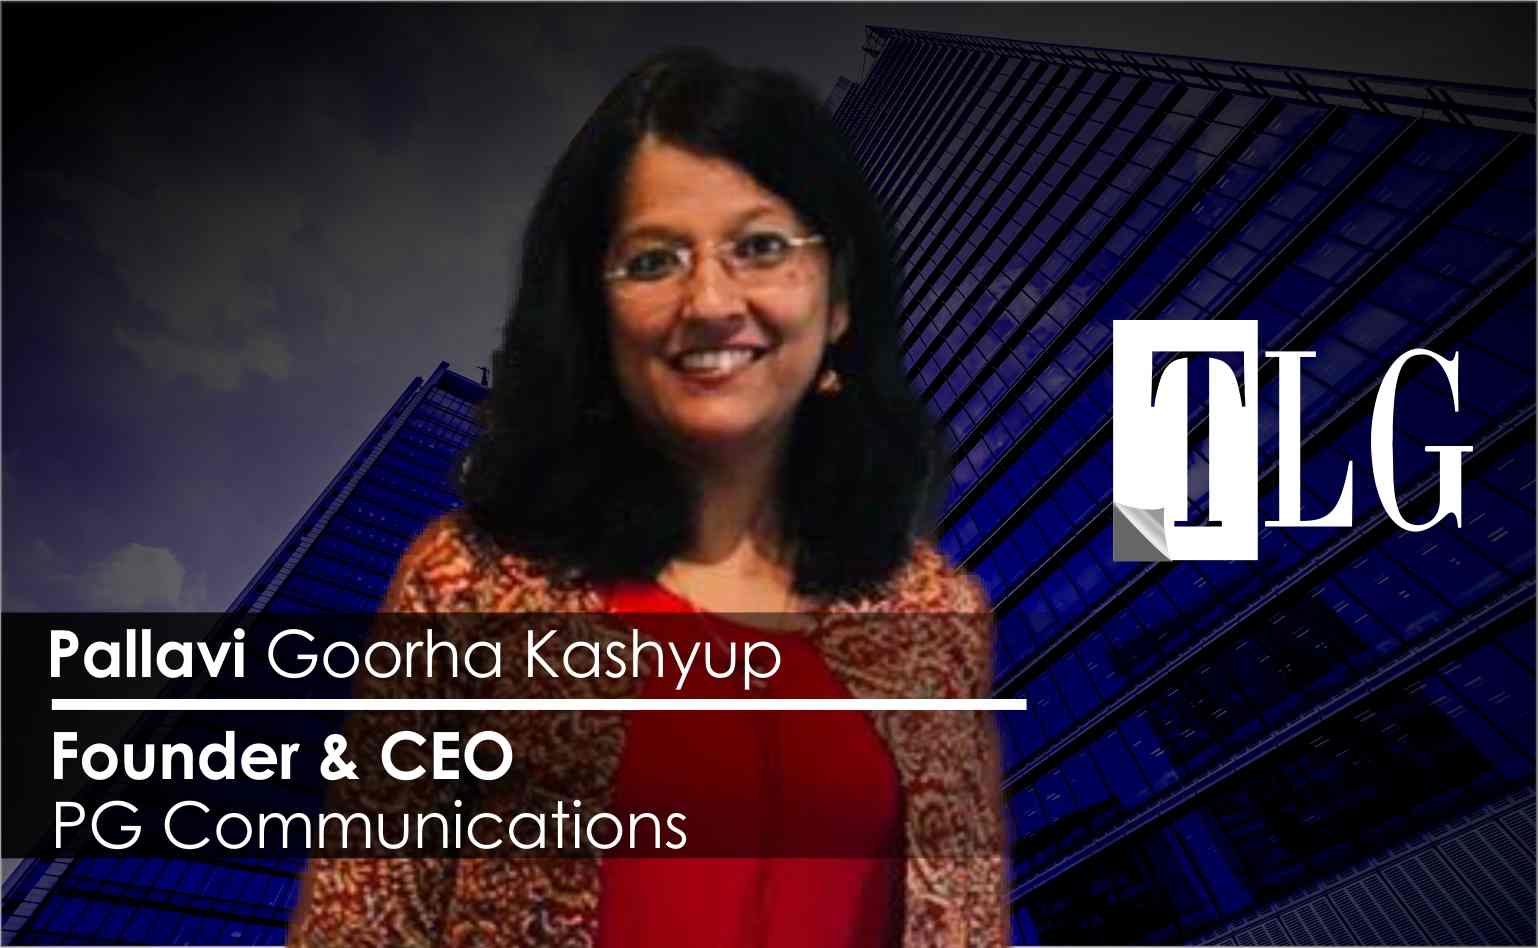 Pallavi Goorha Kashyup, Founder & CEO, PG Communications